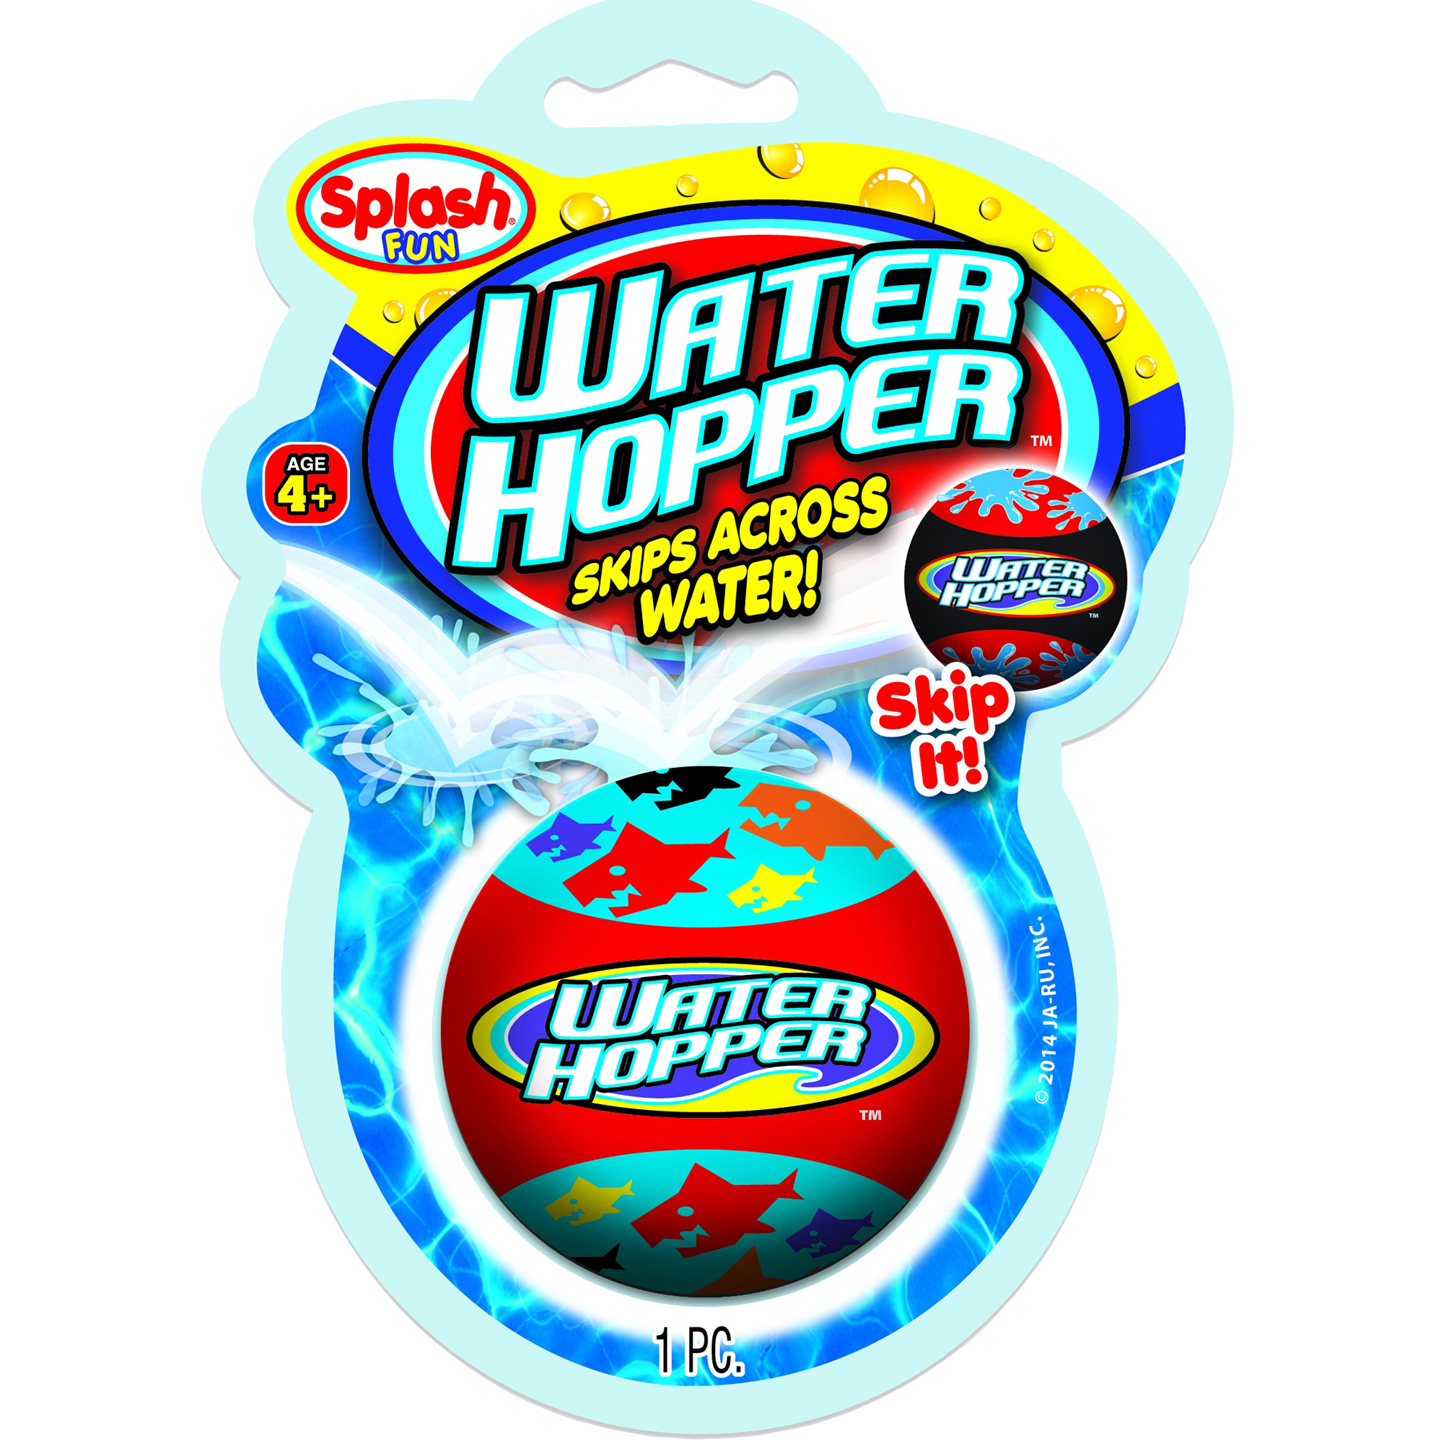 WATER HOPPER SKIP BALL